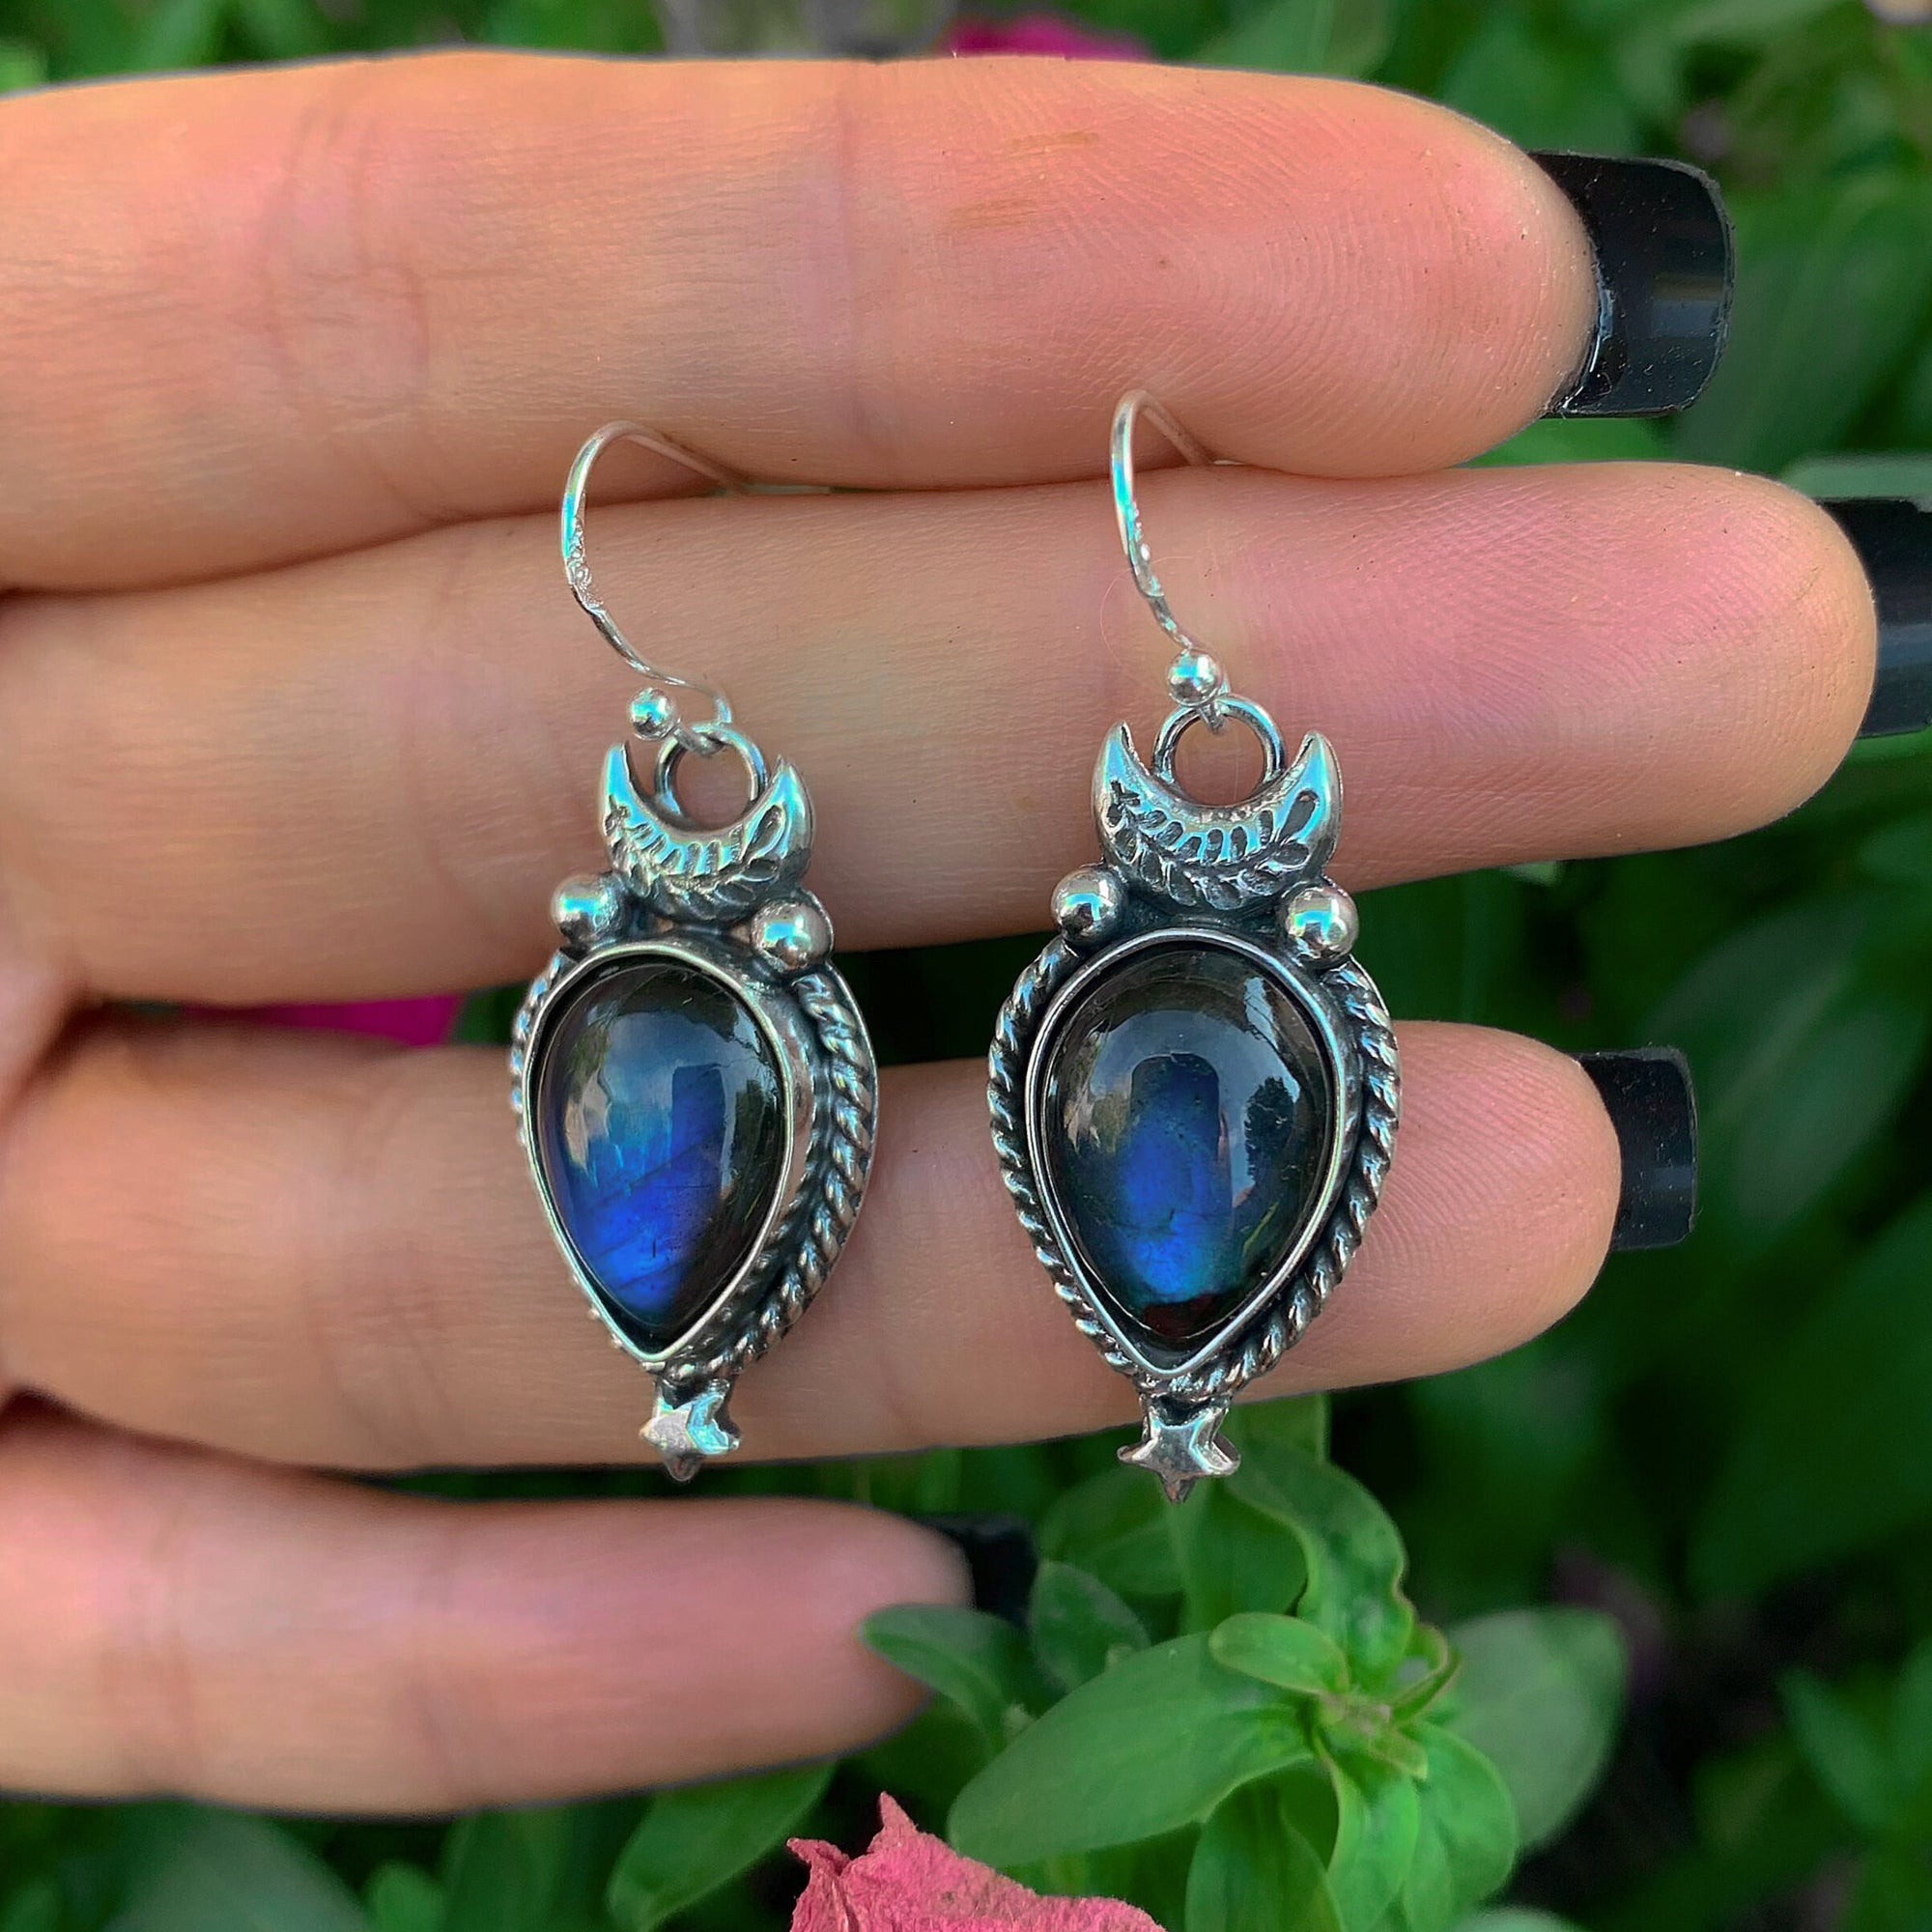 Labradorite Moon Earrings - Sterling Silver - Blue Labradorite Star Earrings - Gemstone Earrings - Labradorite Dangles - Crescent Moon Hooks